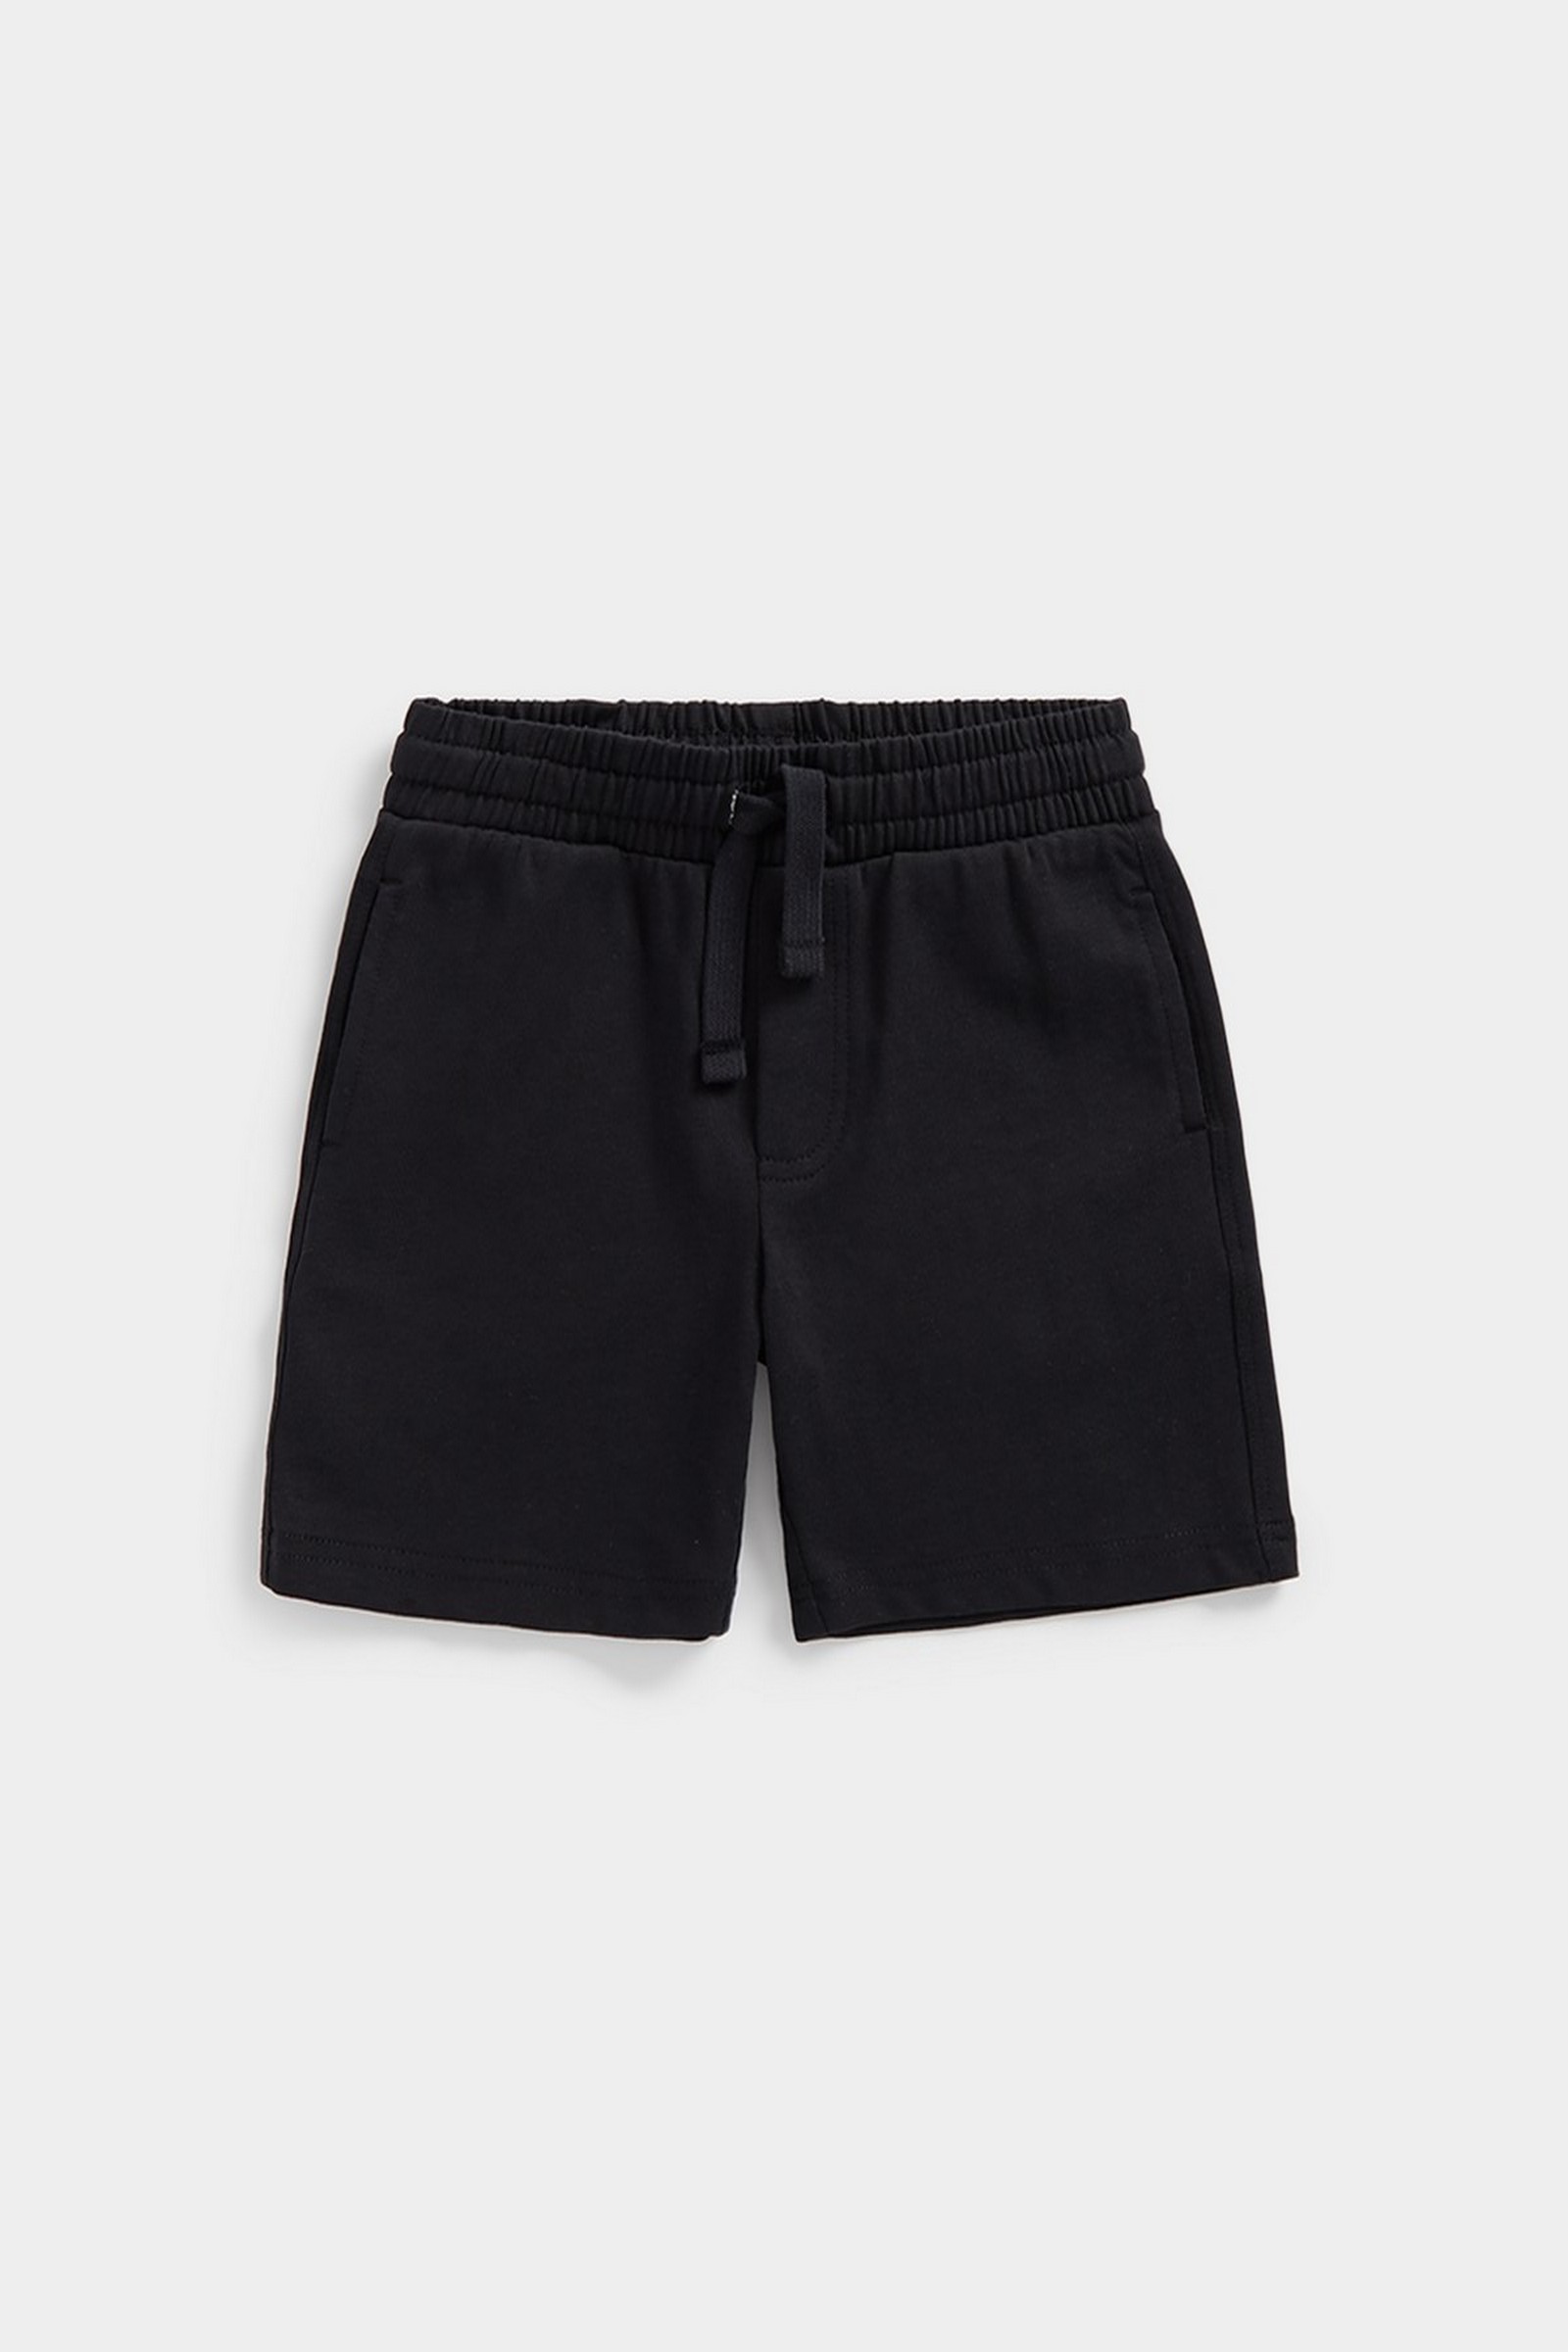 Buy Black Jersey Shorts online